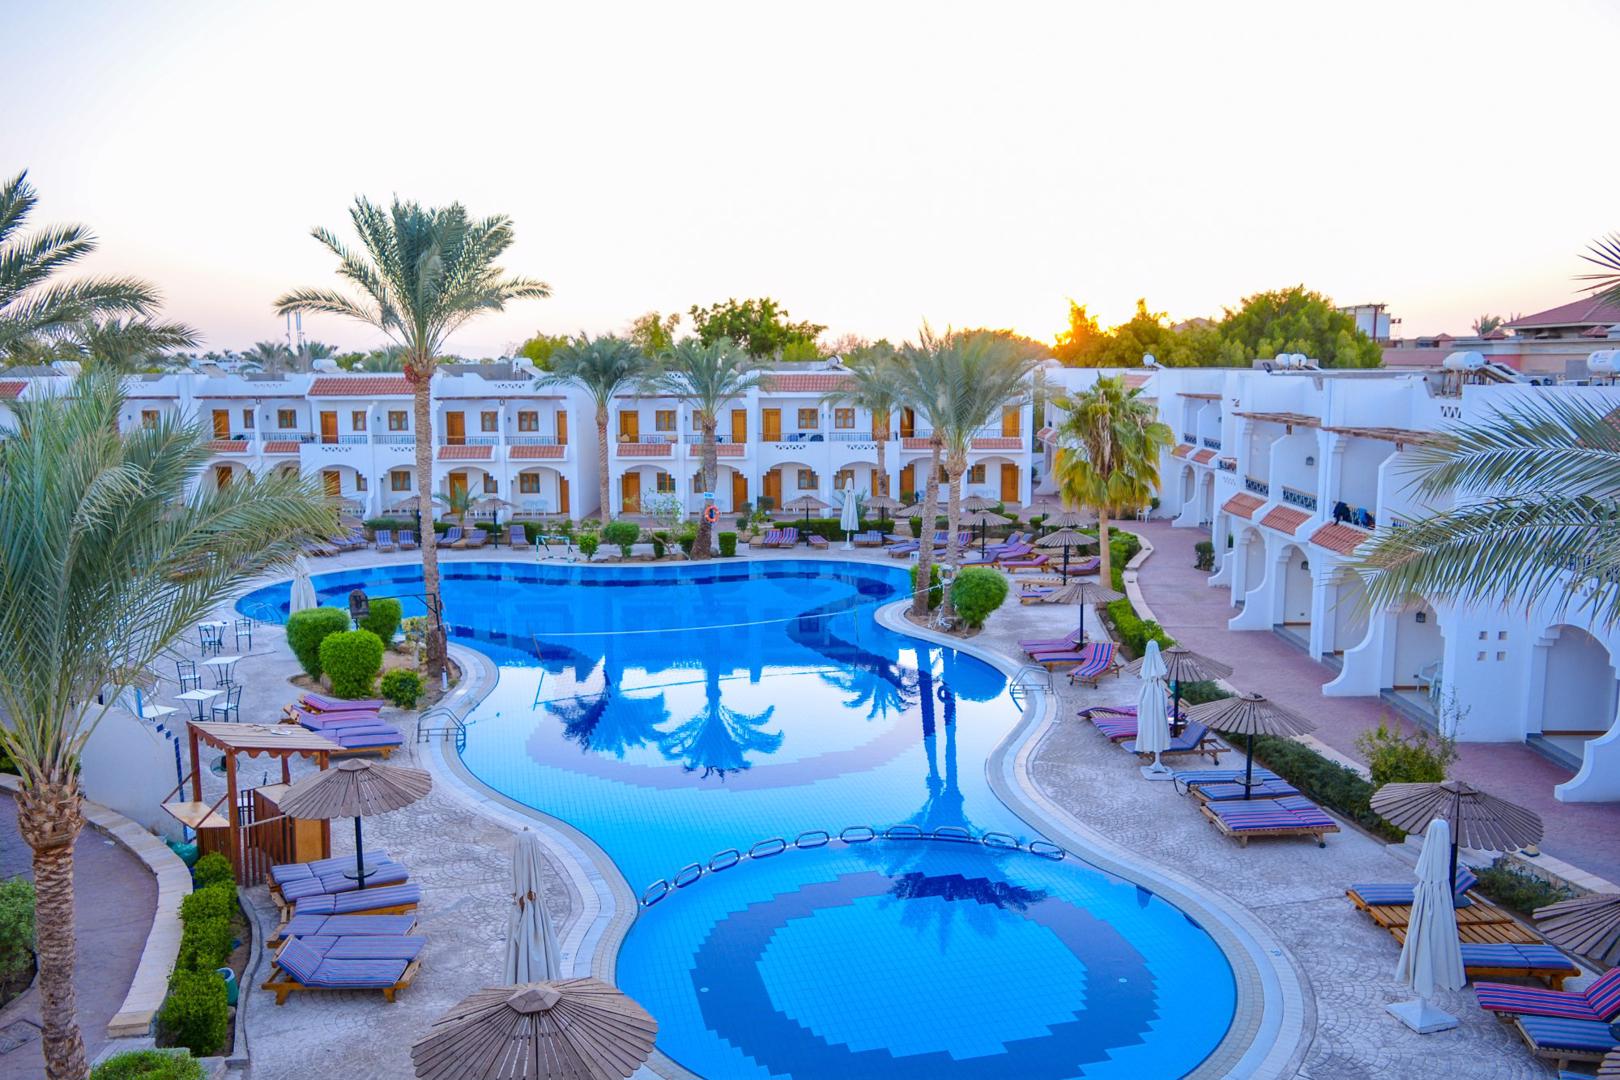 Dive Inn Resort - Sharm El Sheikh - Egypte